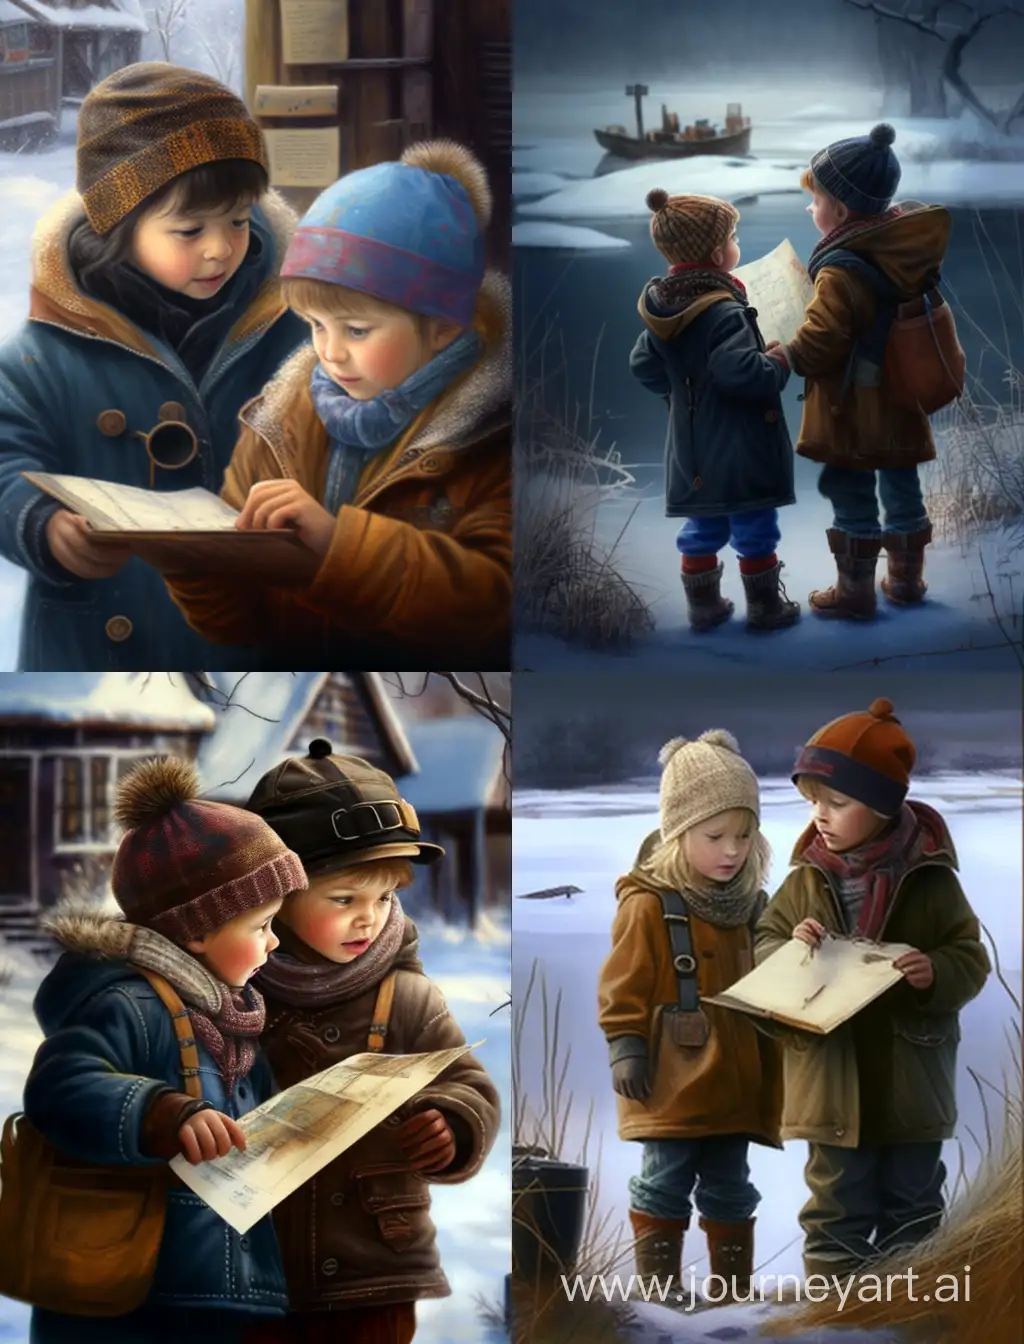 Enchanting-Winter-Quest-Kids-Treasure-Hunting-for-Keys